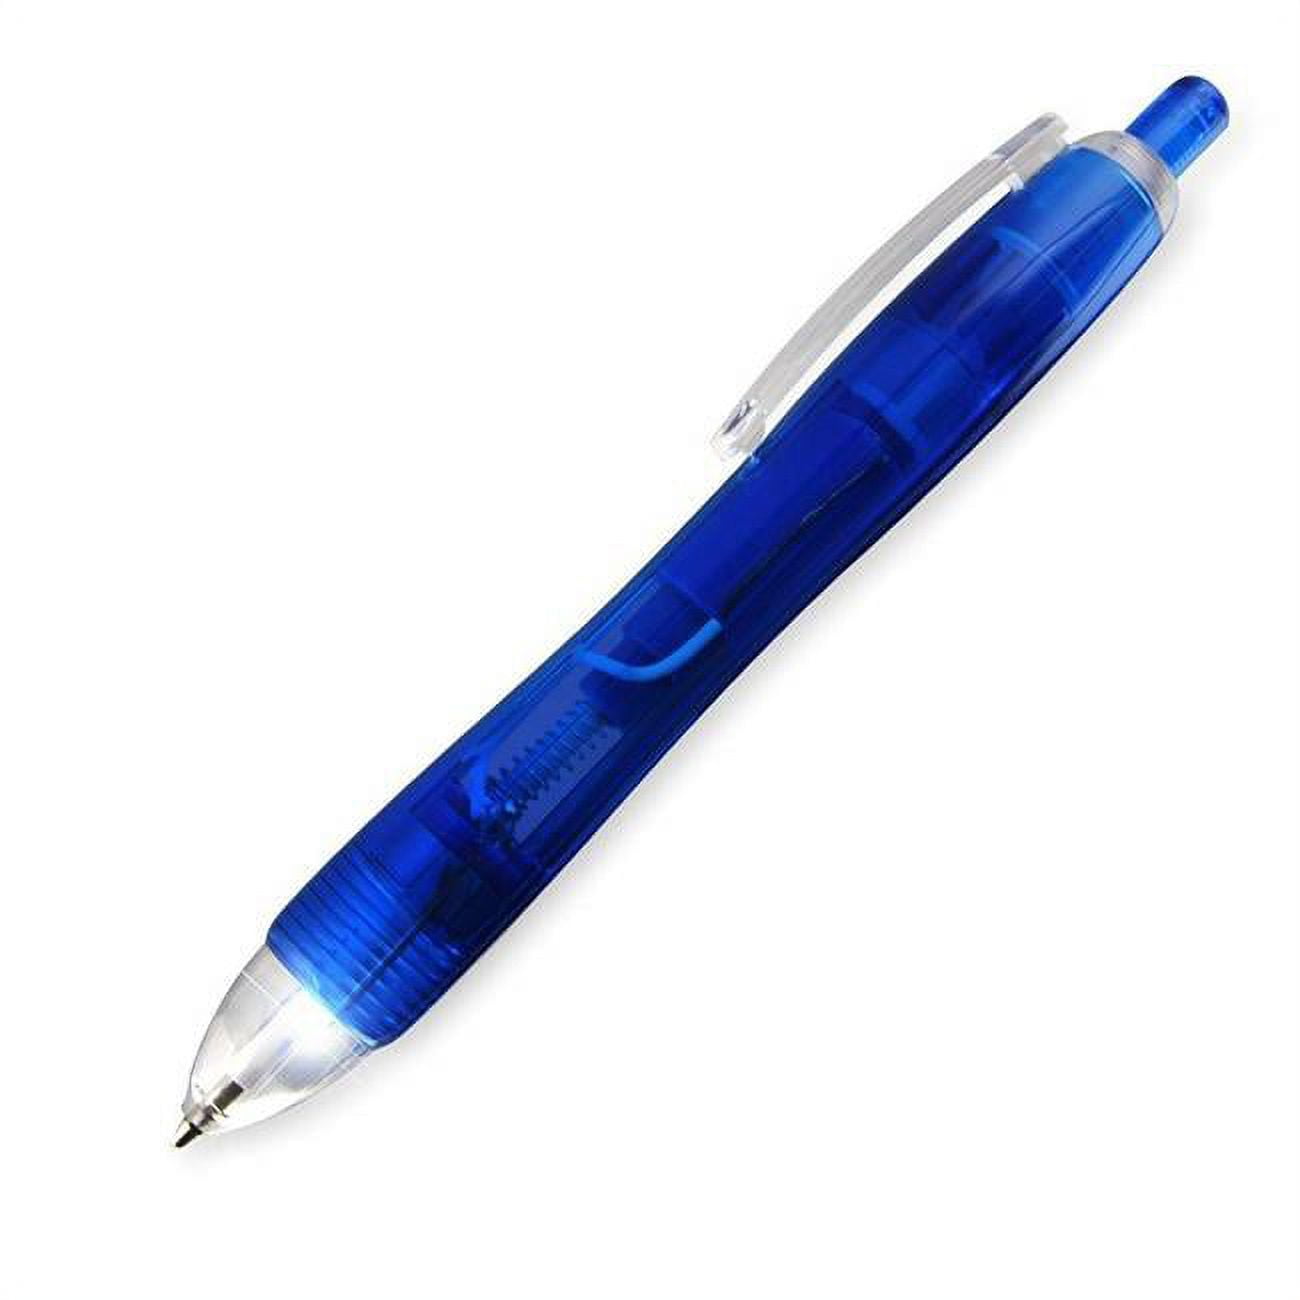 1500014 Blue Tip Pen With White Led